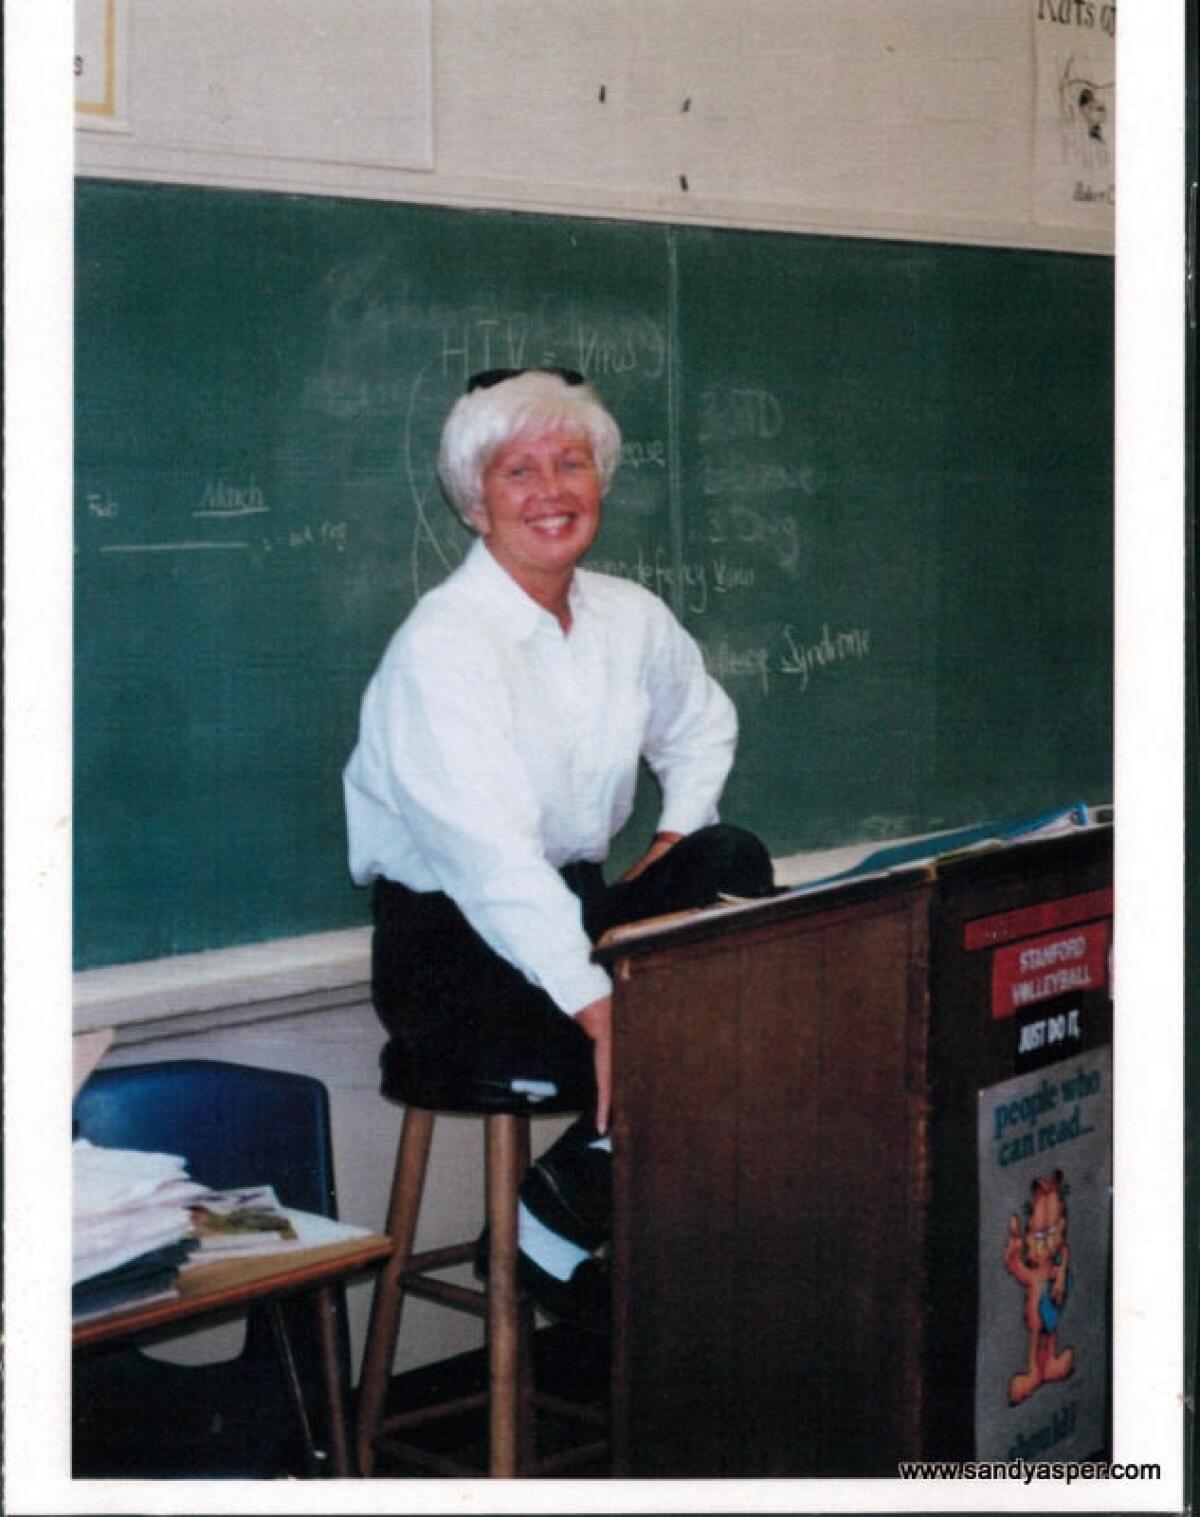 Sandra Asper, pictured in an undated photo, teaching in her classroom at Ensign Intermediate School.